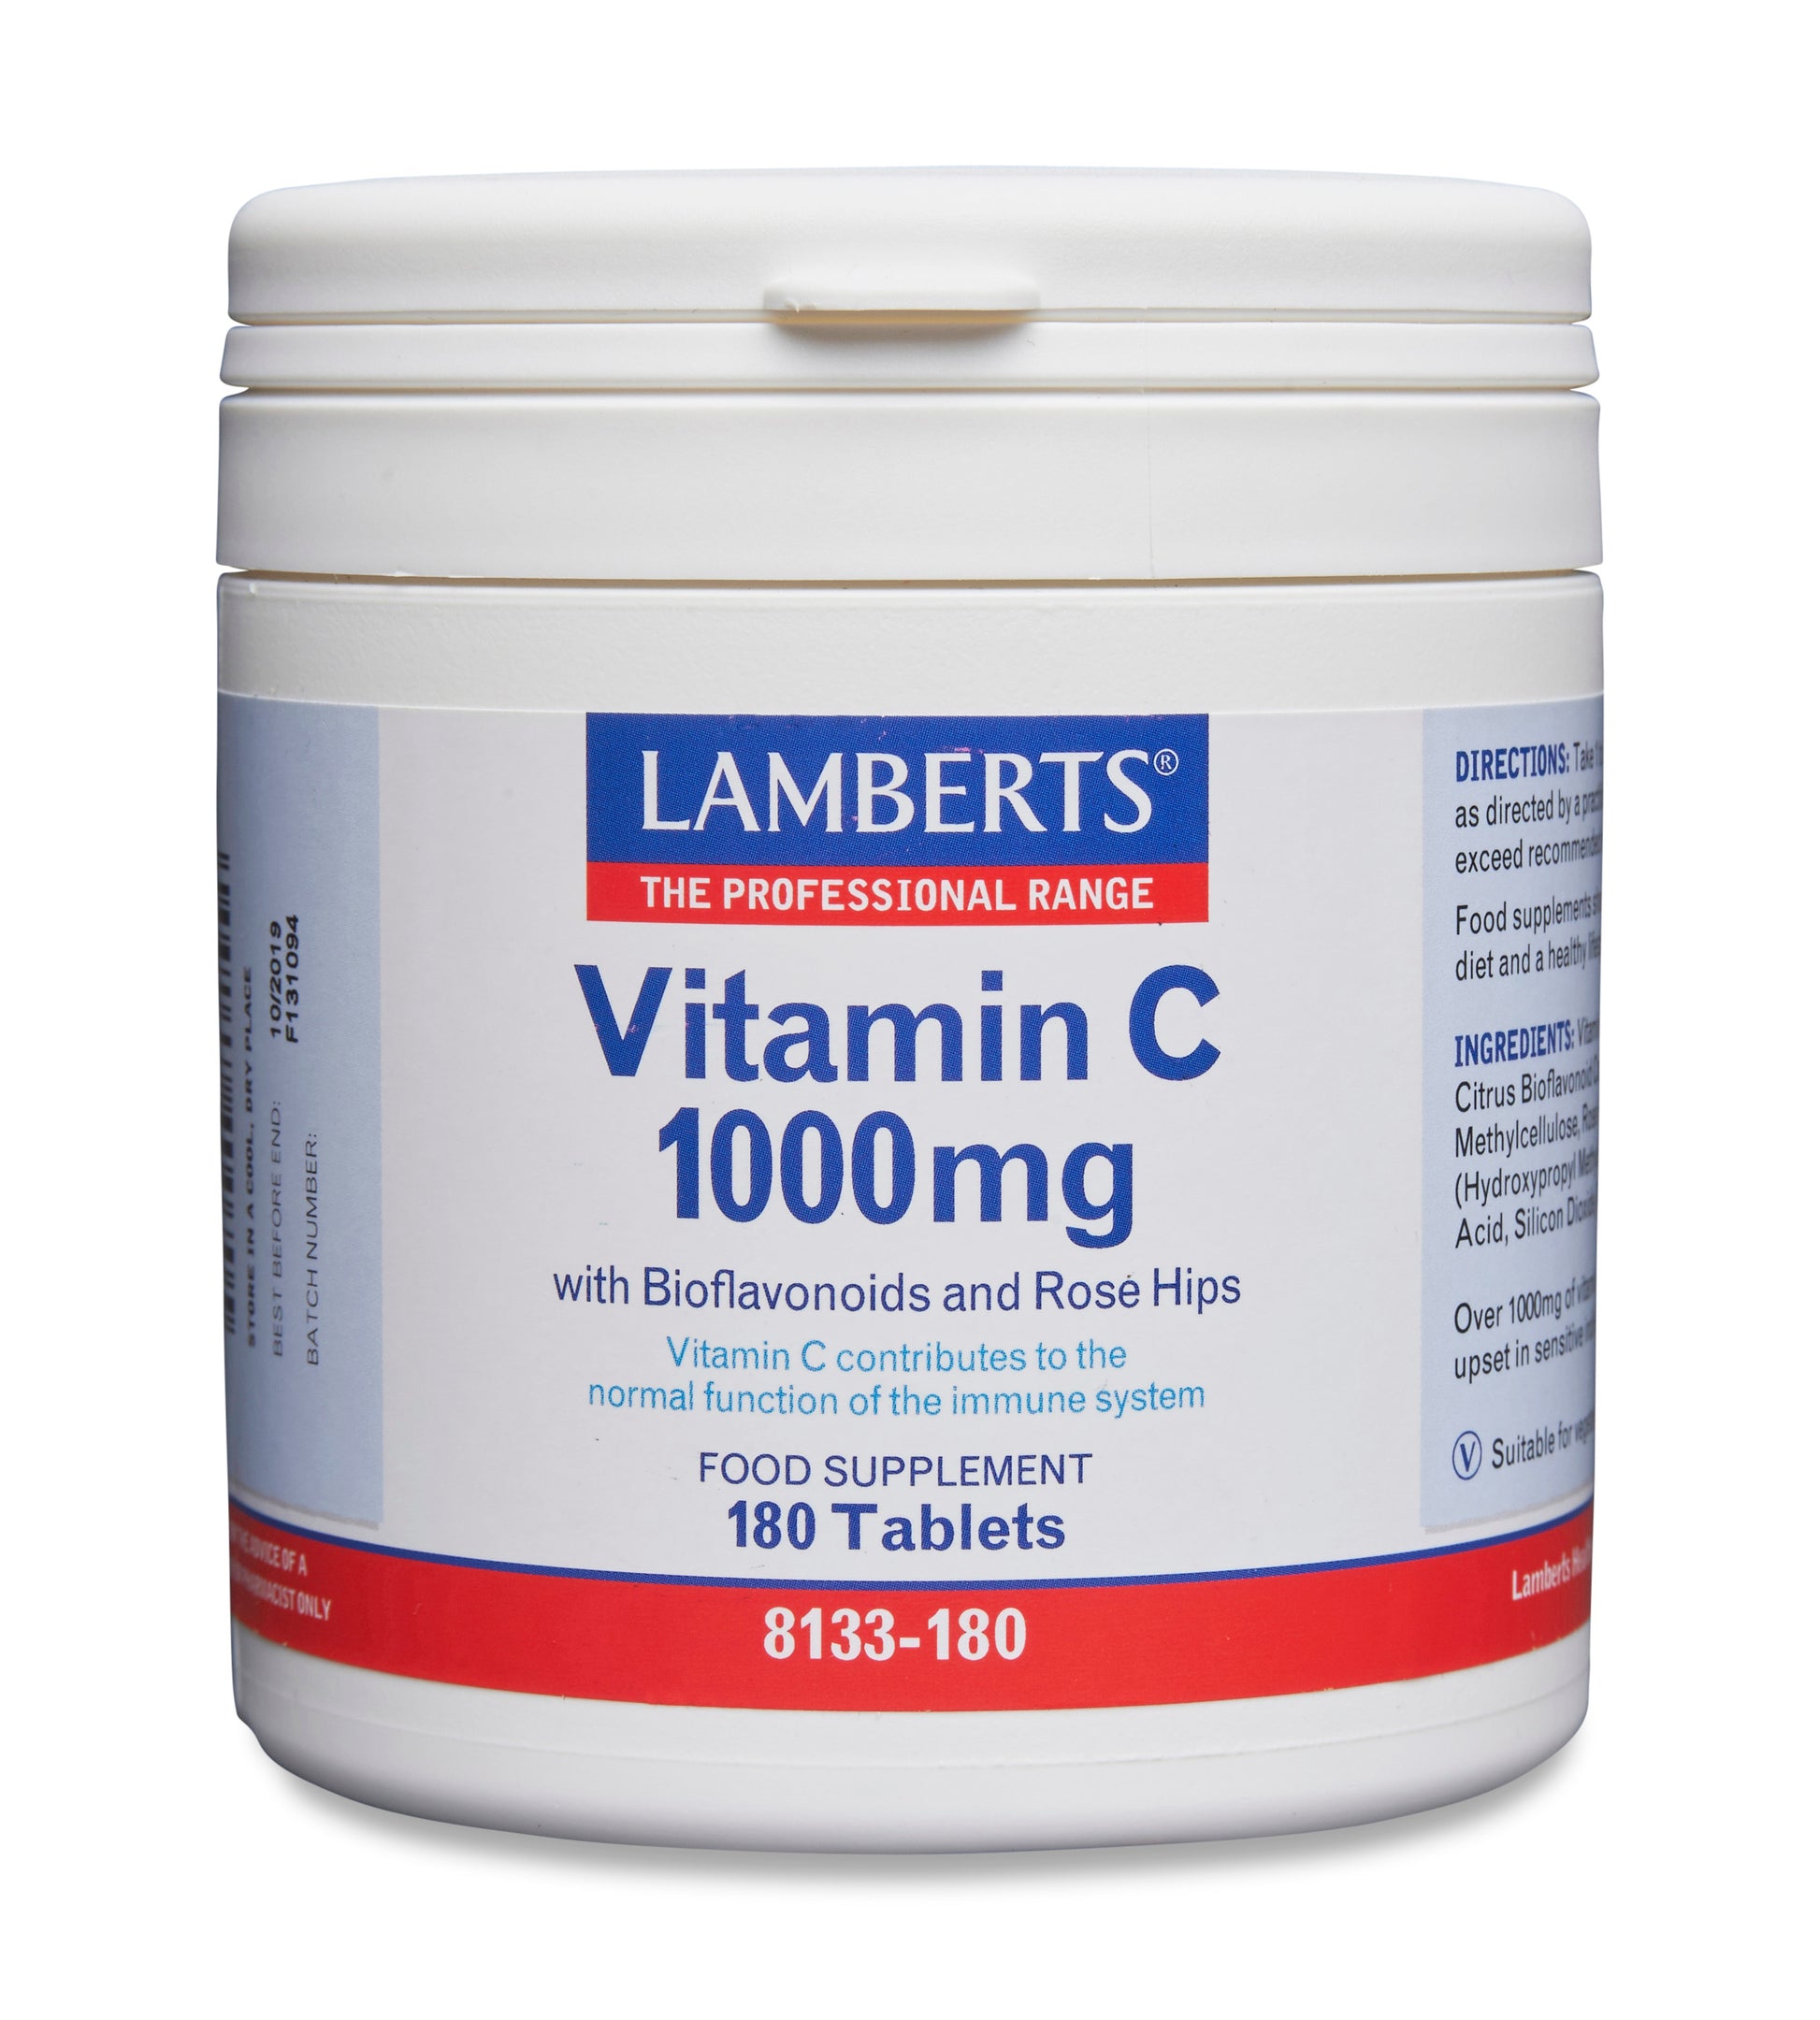 lamberts - 180 Tablets Vitamin C 1000mg